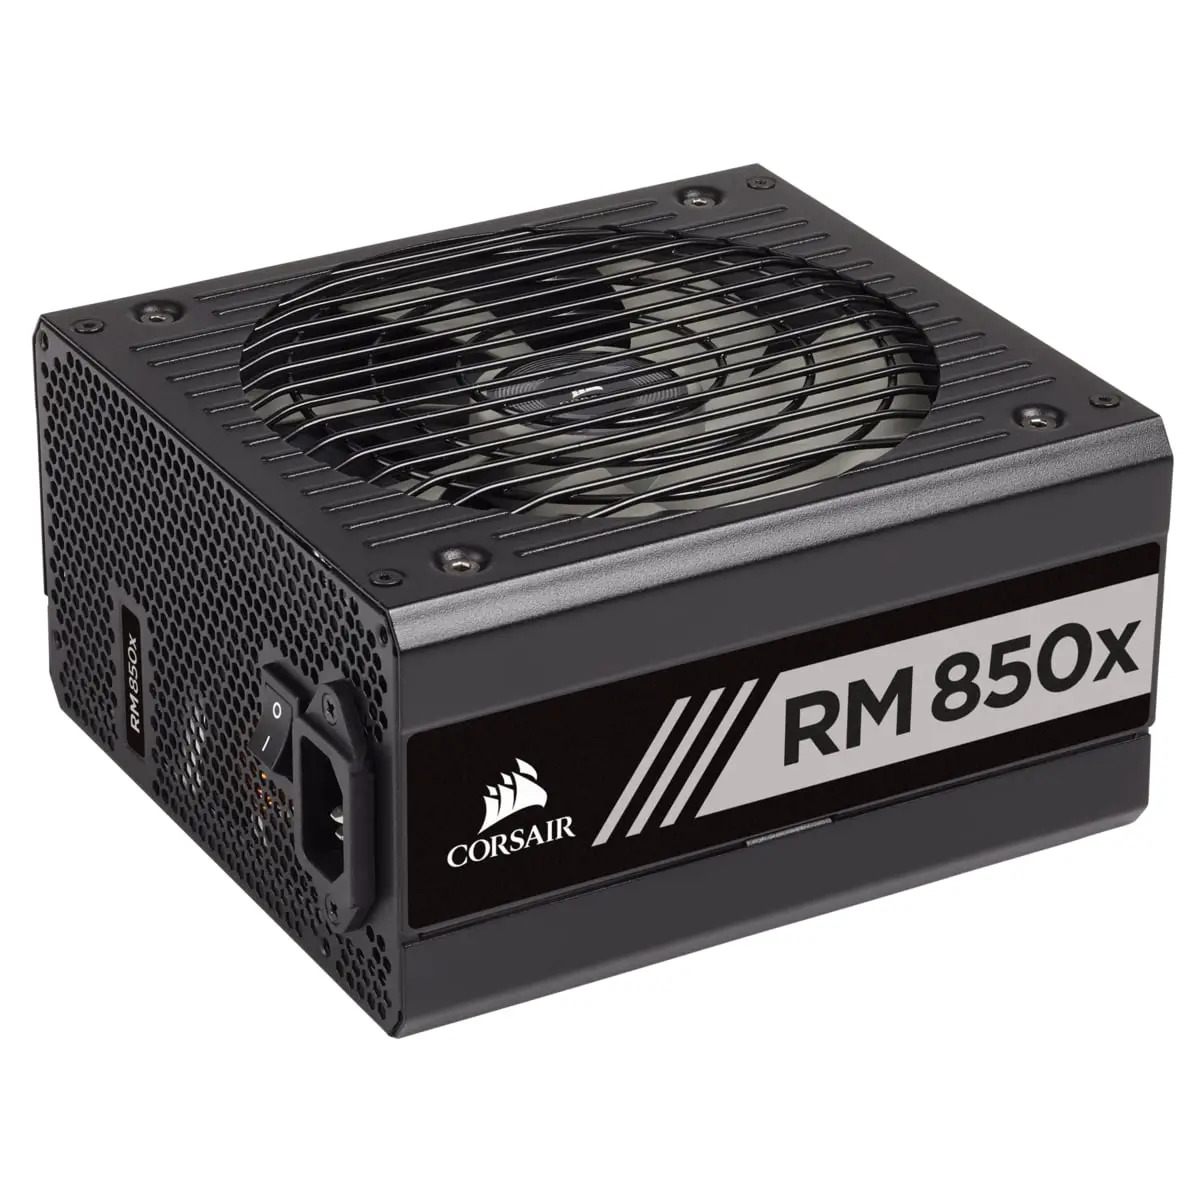 RMx Series™ RM850x